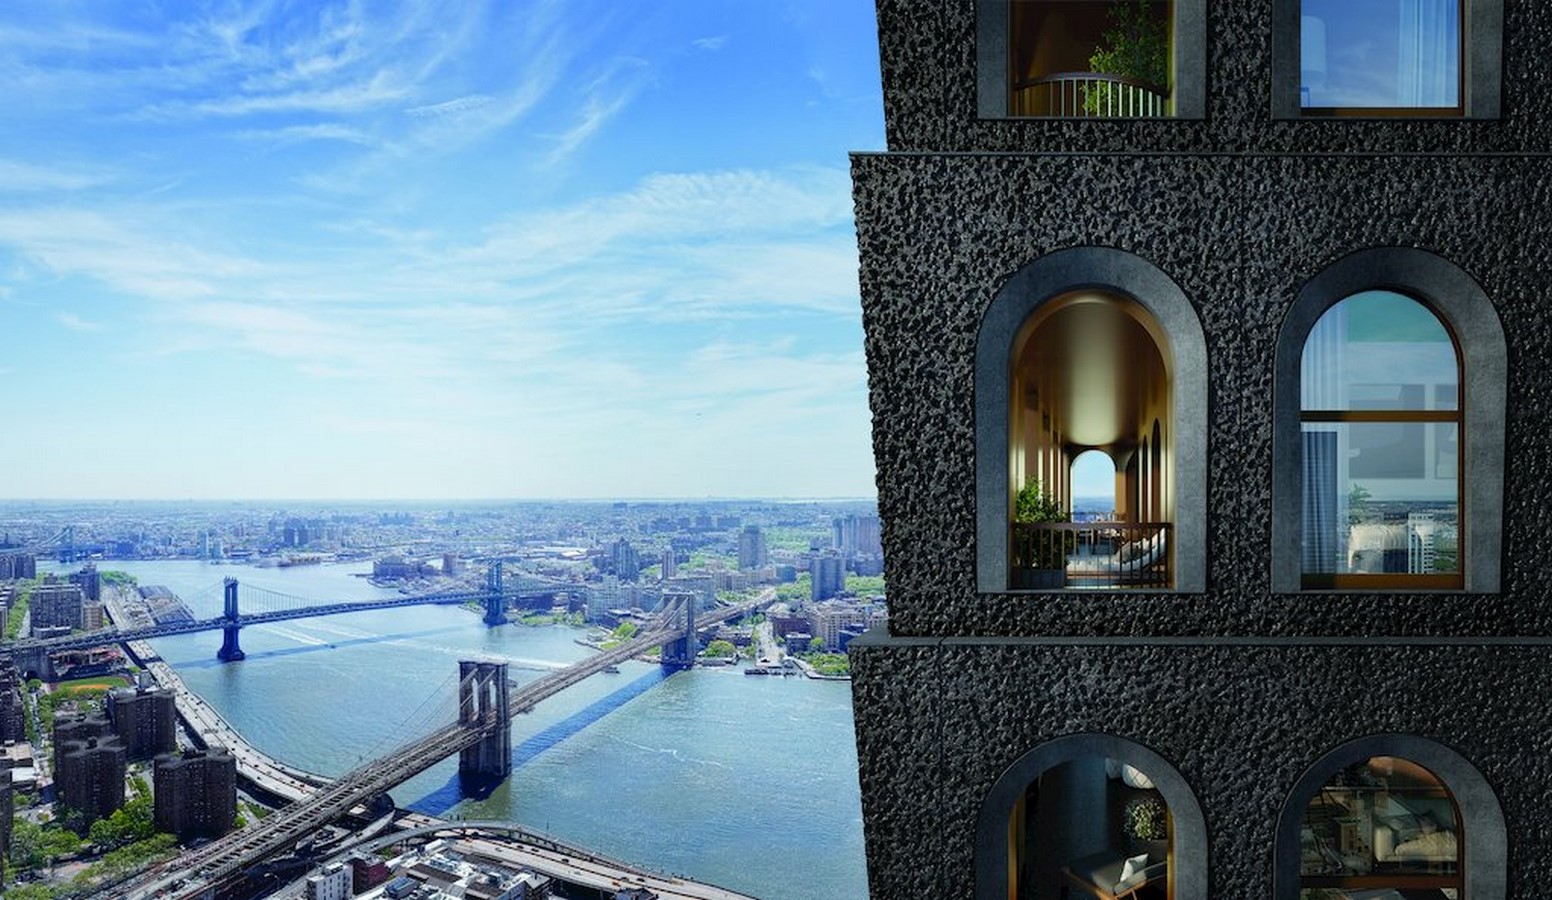 130 William by Sir David Adjaye: An elegant luxury condominium in Lower Manhattan - Sheet7